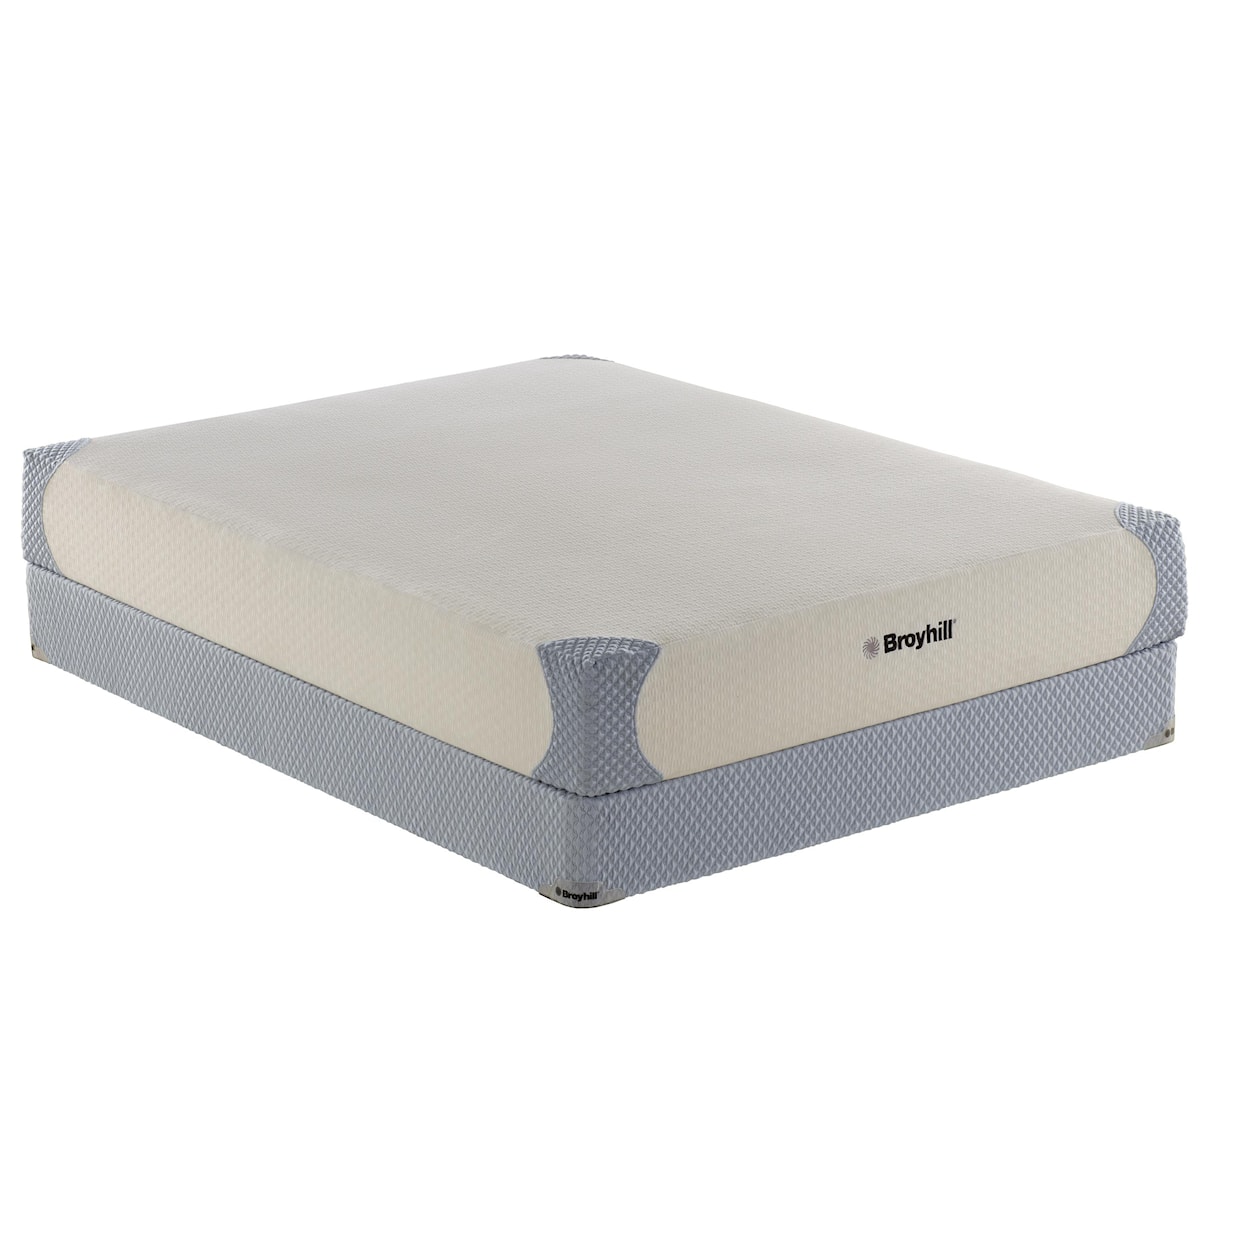 Boyd Specialty Sleep Sensura TXL Plush Memory Foam Mattress